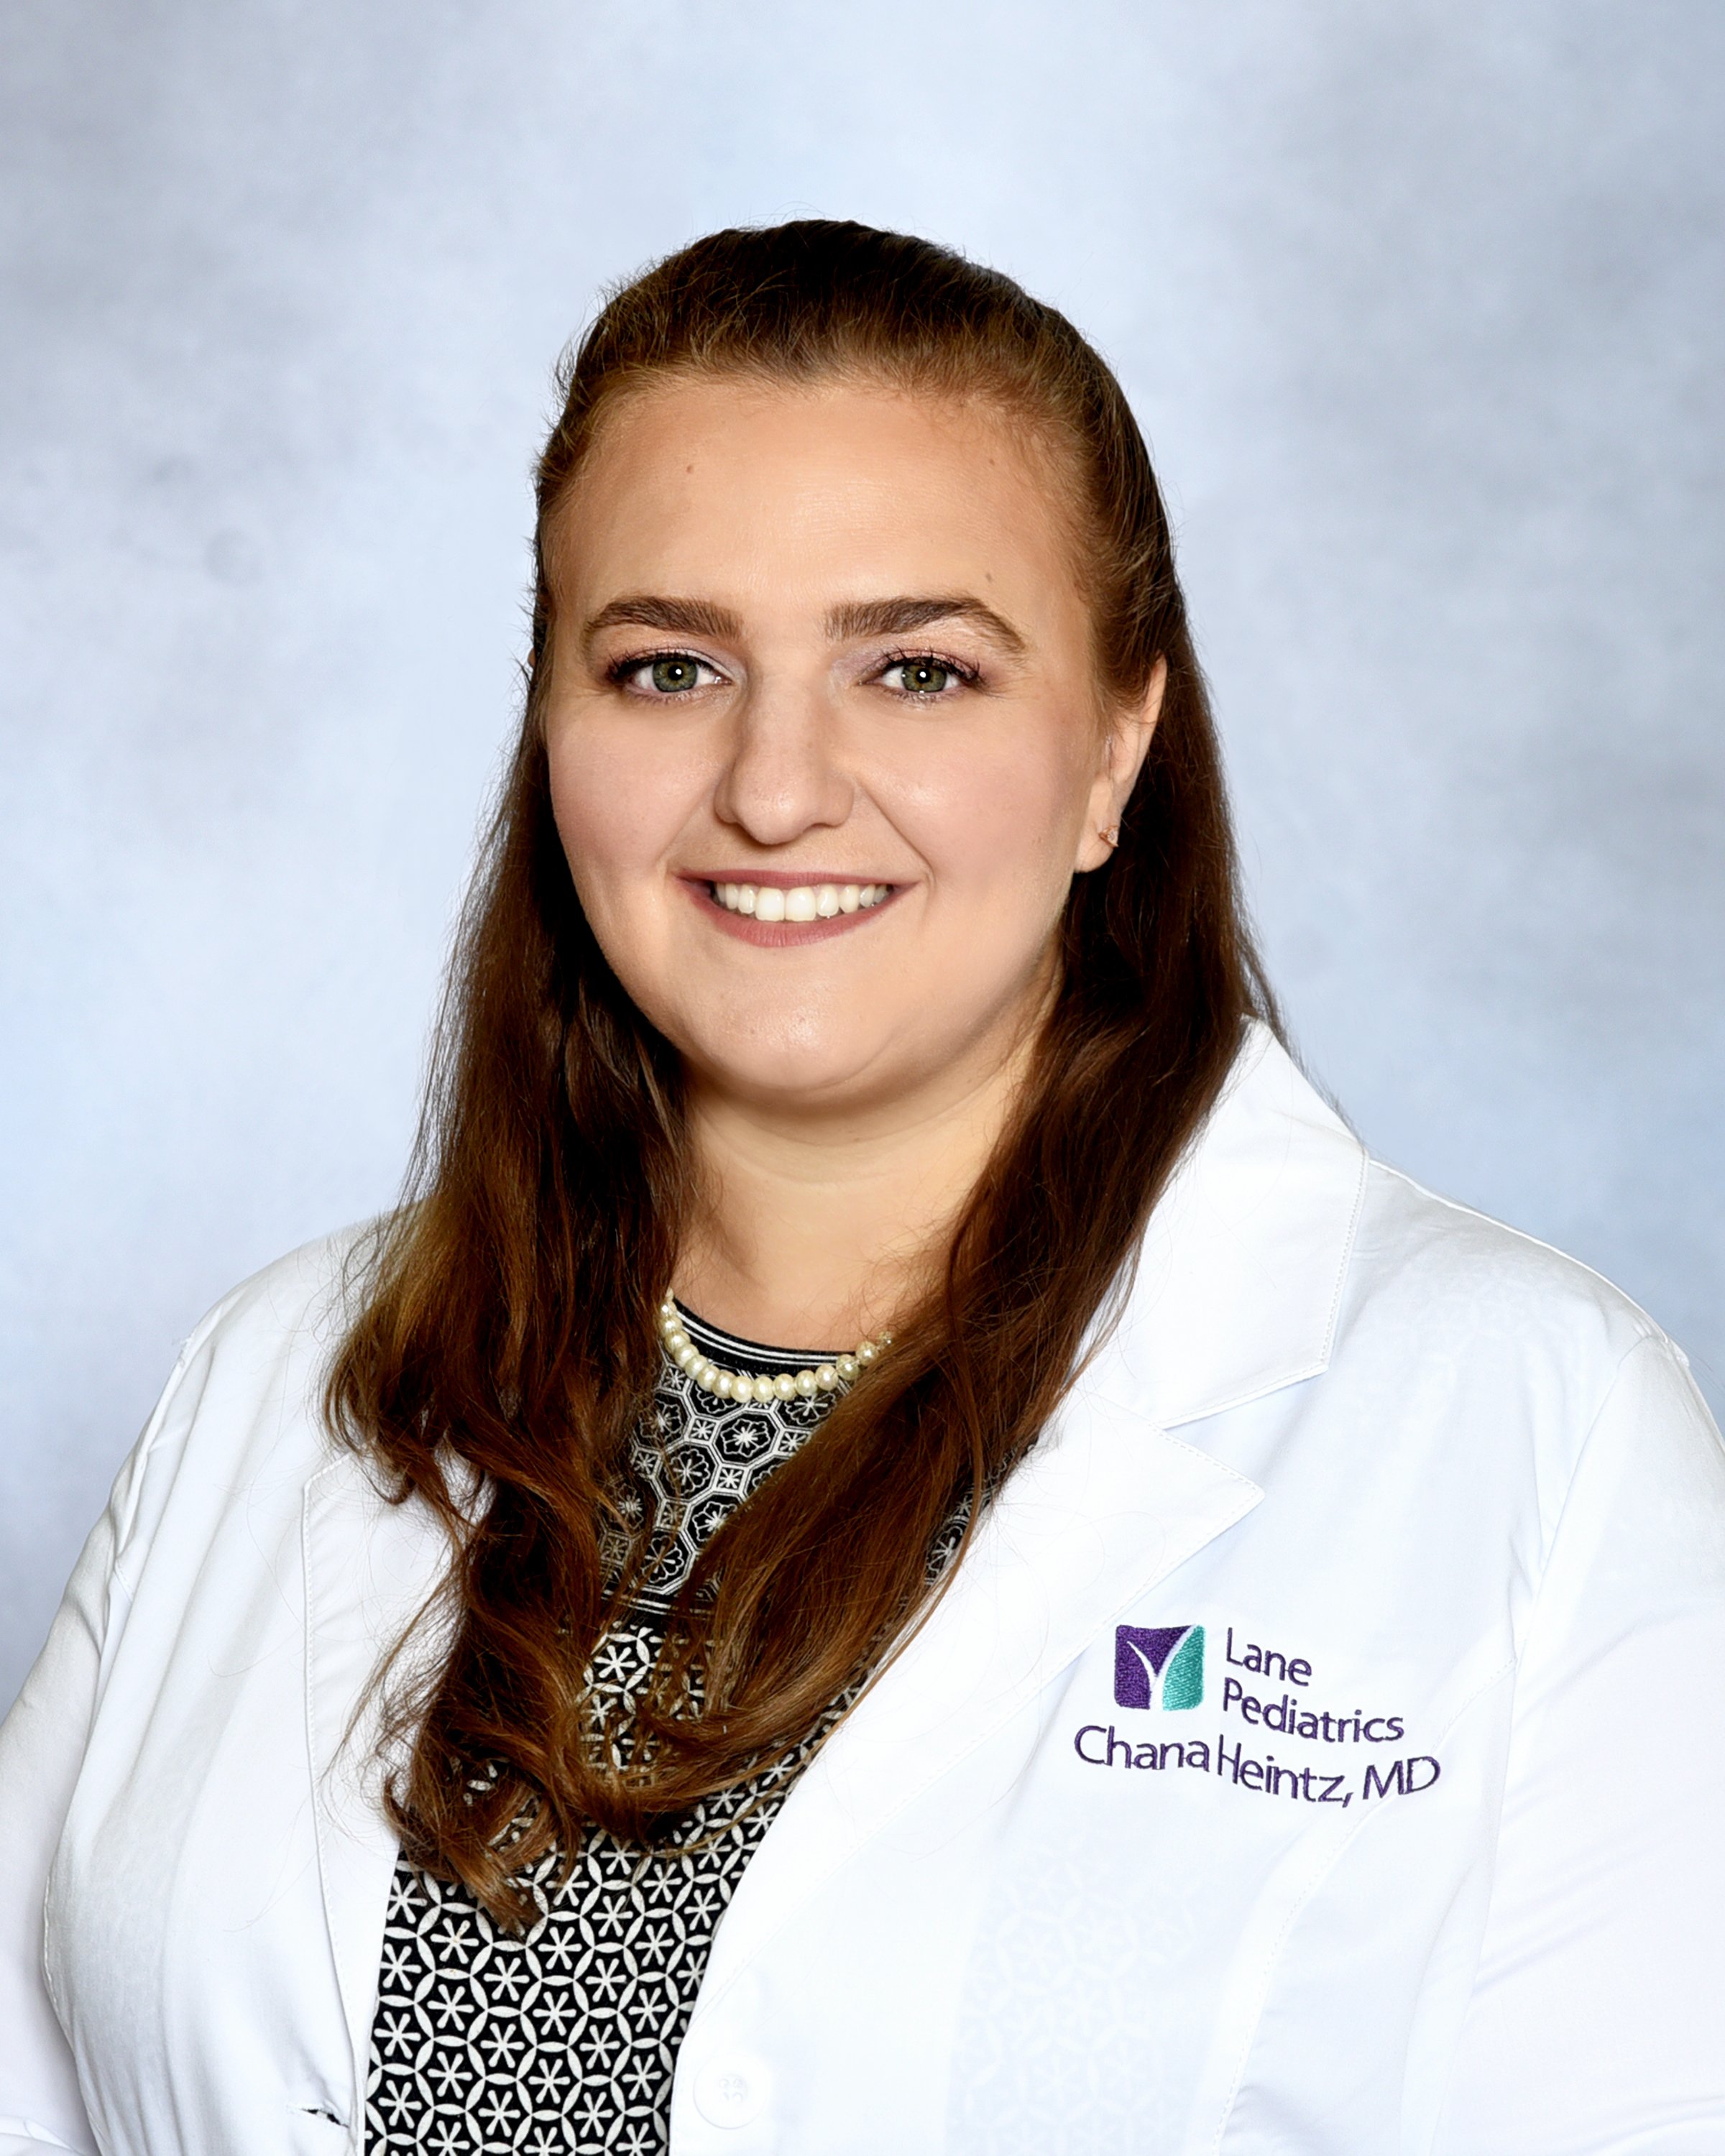 Dr. Chana Heintz Joins Lane Pediatrics